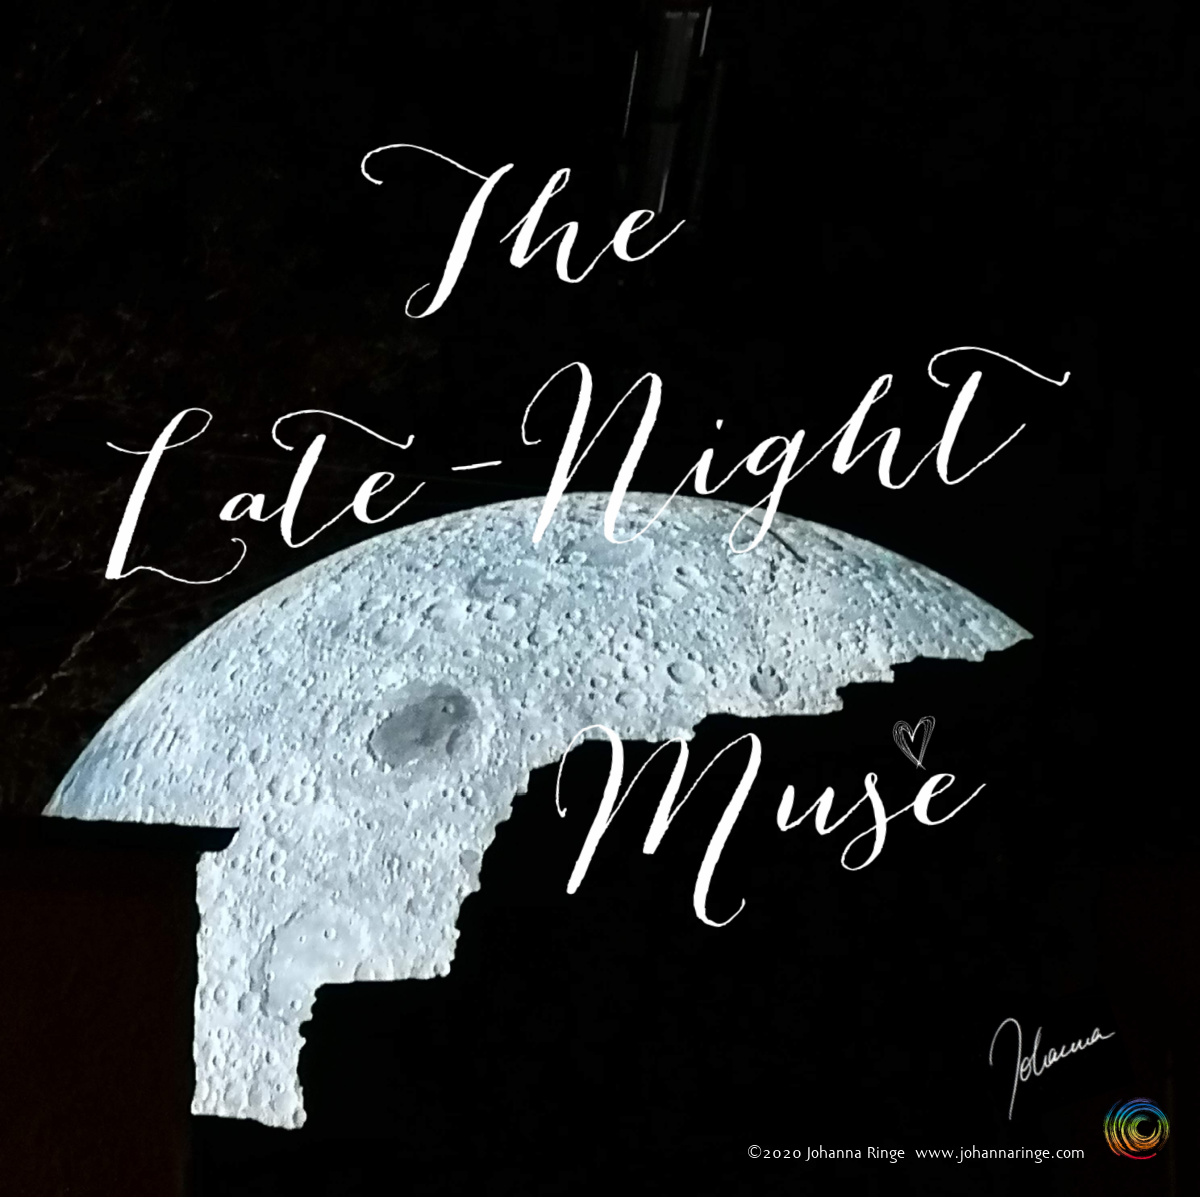 The Late-Night Muse. (Text on photo of Big Moon behind buildings) ©Johanna Ringe 2020 www.johannaringe.com